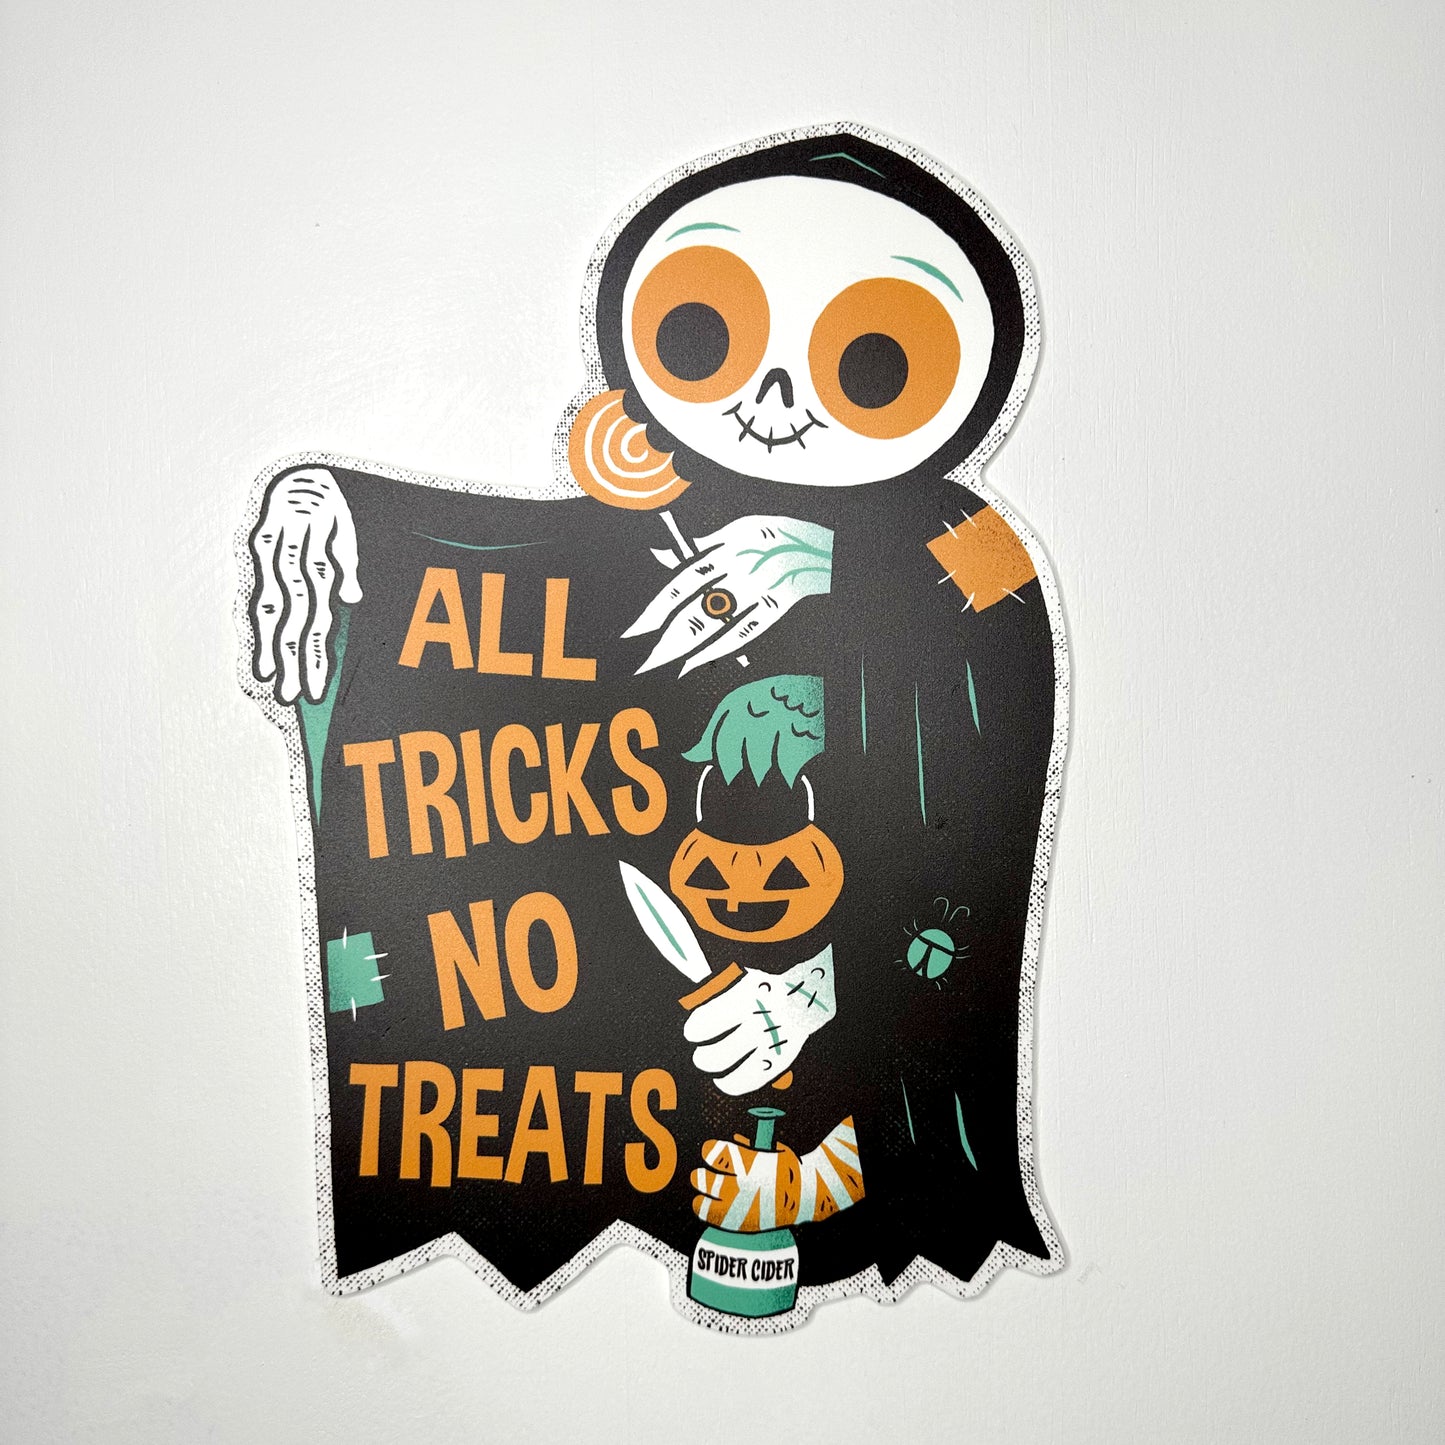 "All Tricks no Treats" cutout print